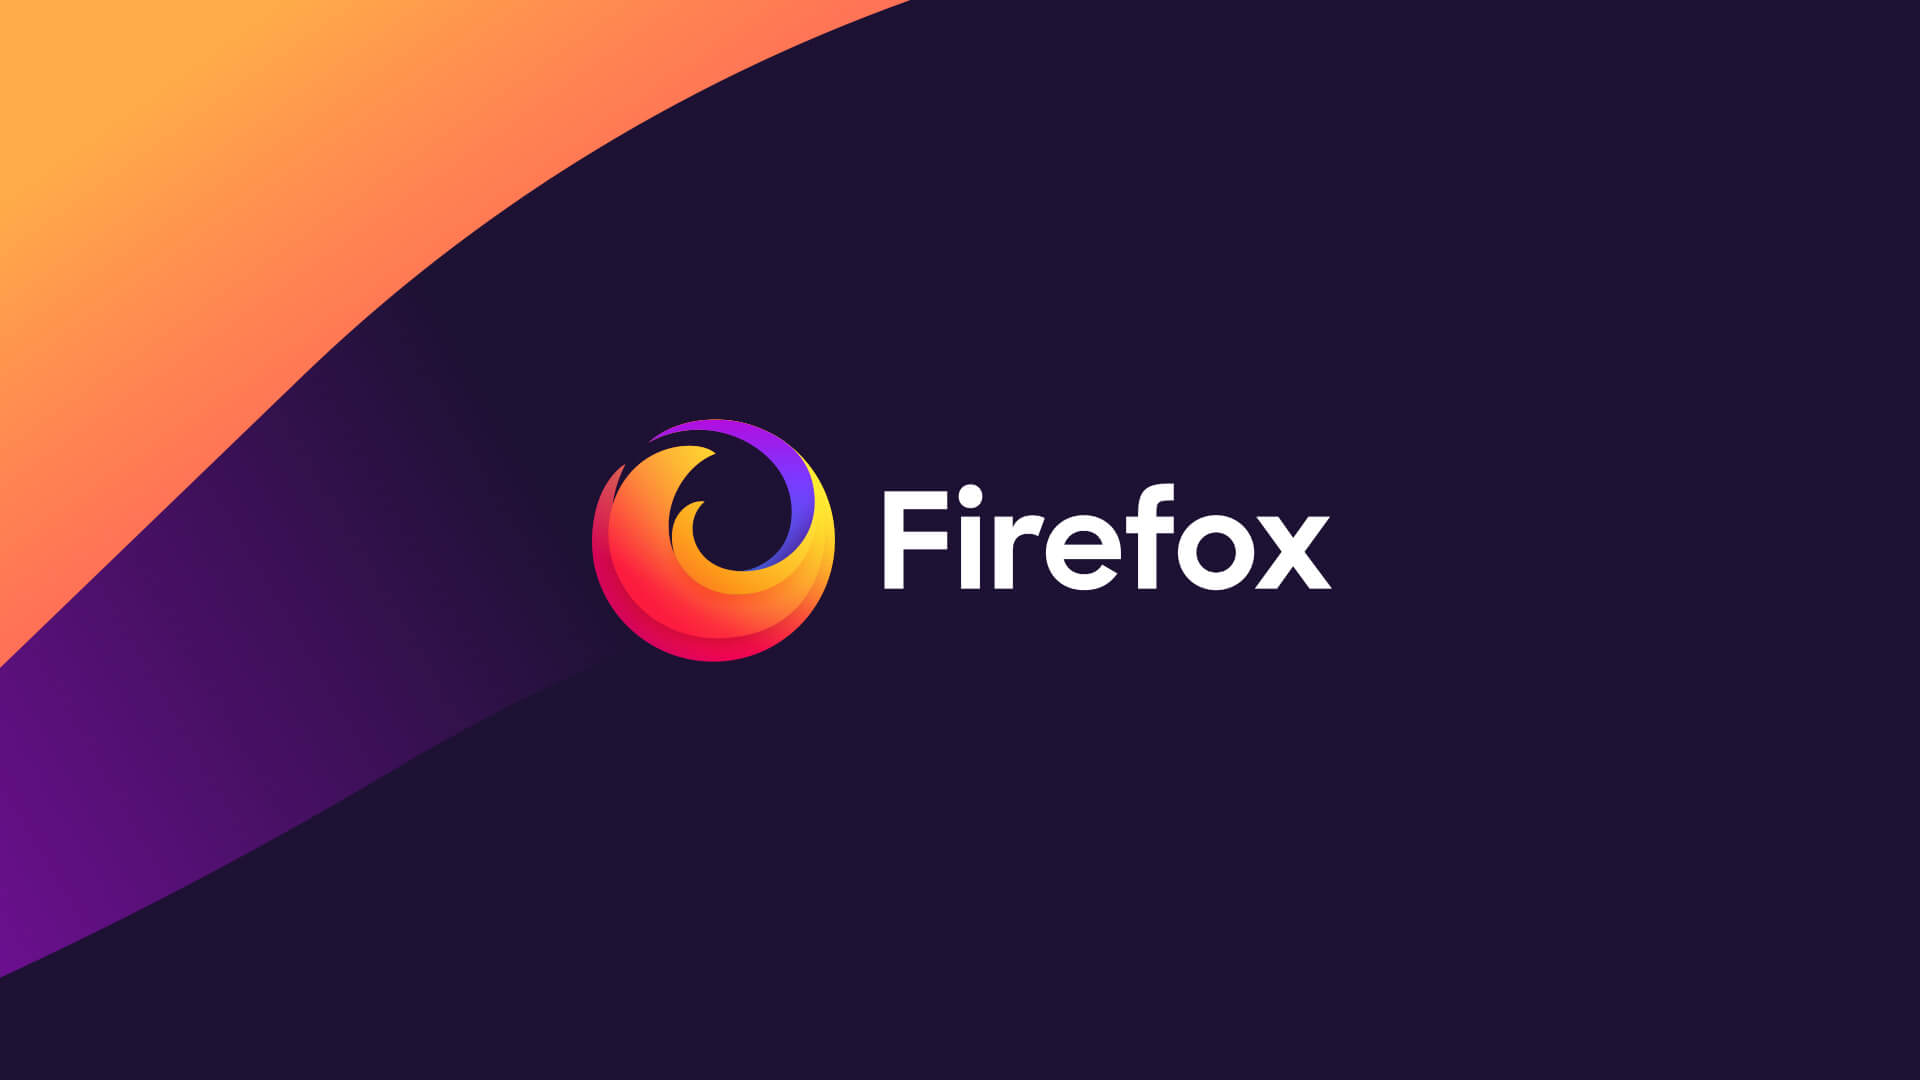 Fire fox web chrome 44.0 free download